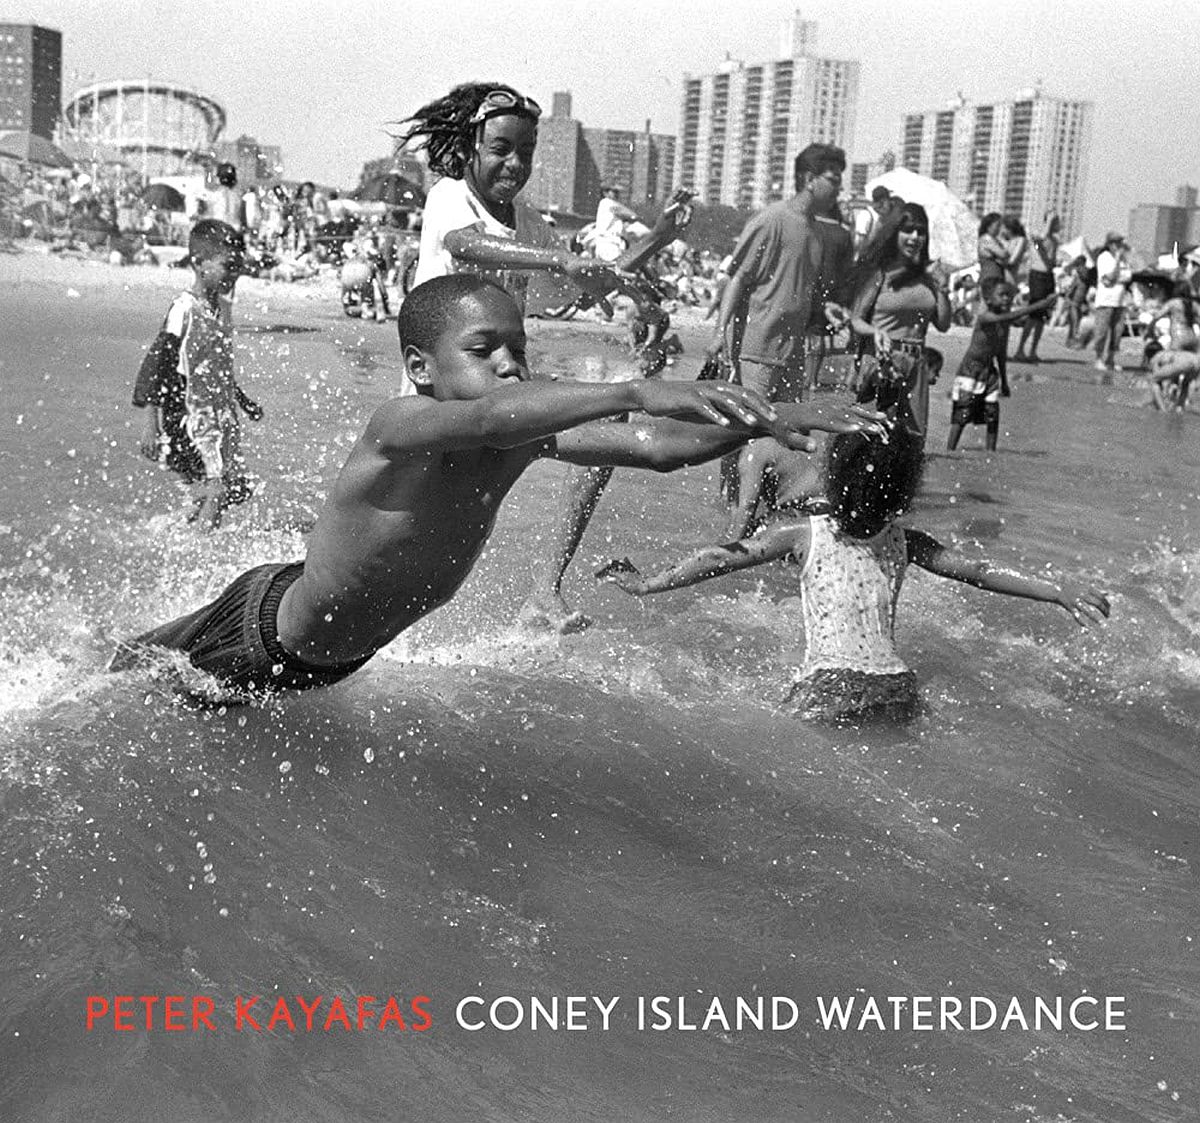 © Peter Kayafas: Coney Island Waterdance